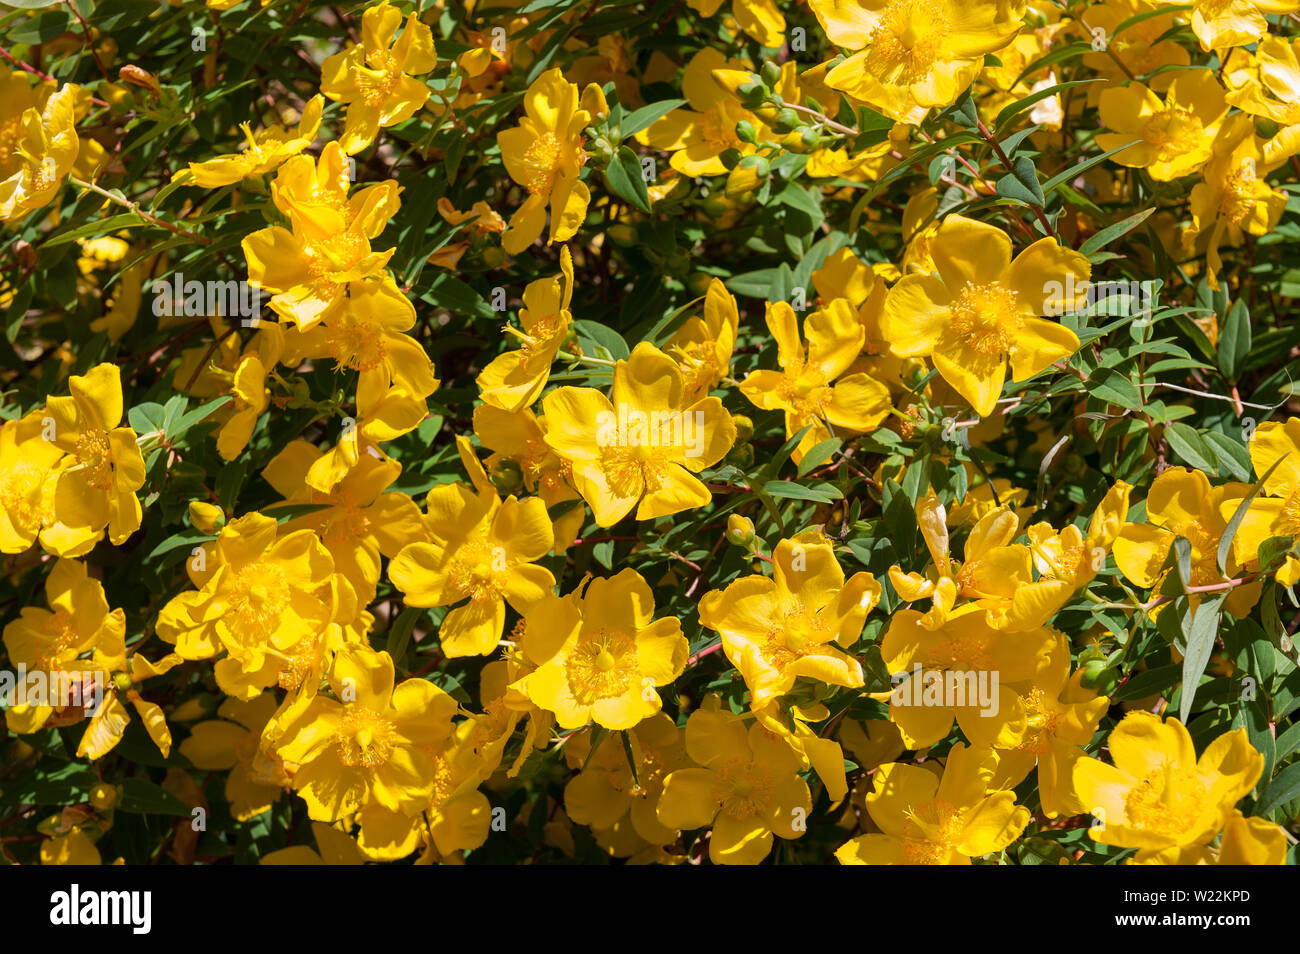 Bright yellow blossom flowers of Potentilla, Shrubby Cinquefoil, an uplifting feeling in heart of summer; Potentilla fruticosa Stock Photo